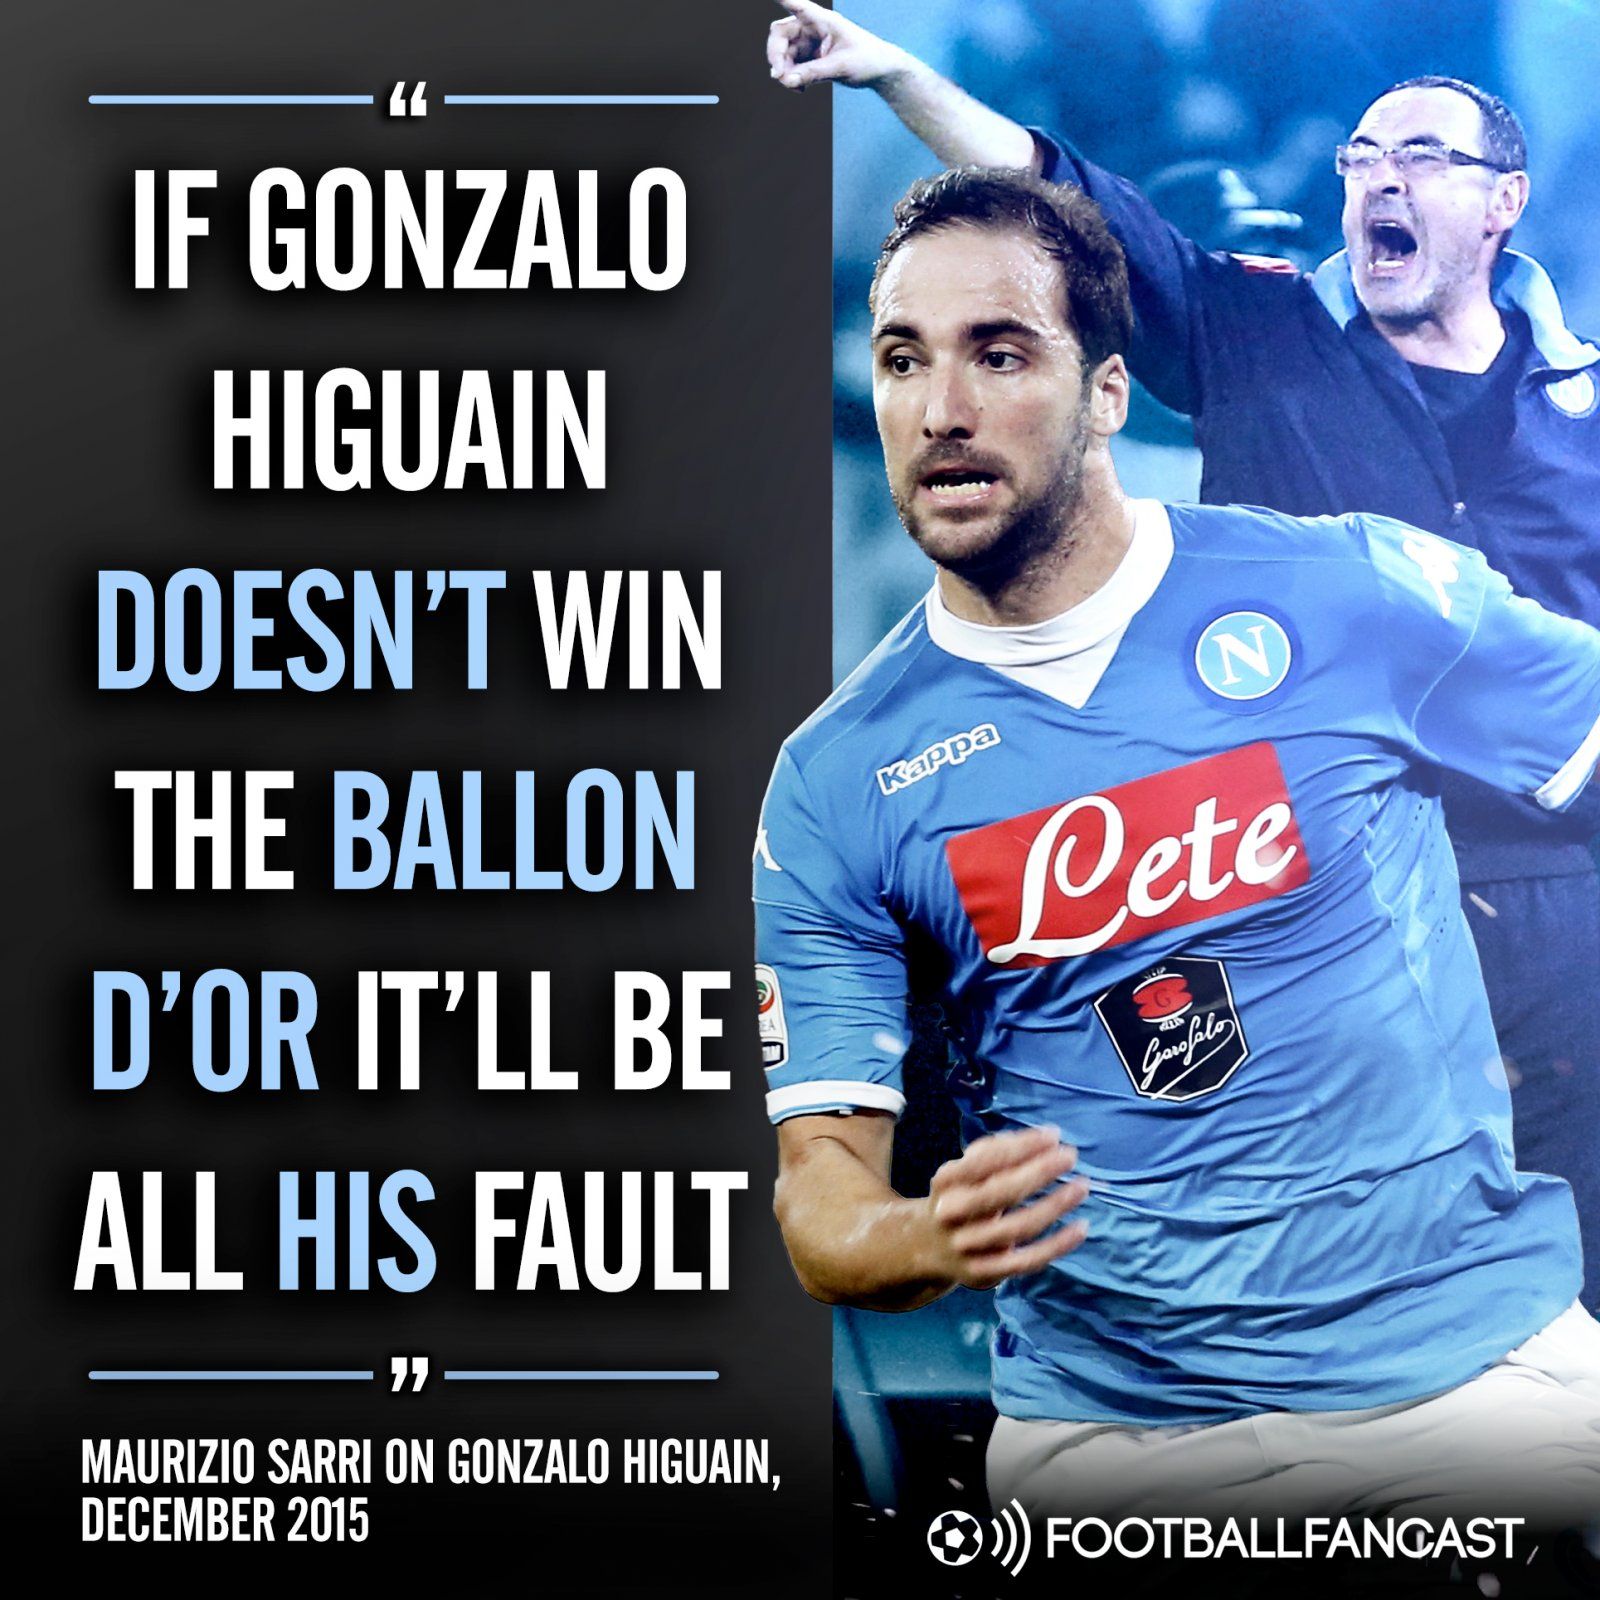 Maurizio Sarri's quotes on Gonzalo Higuain and the Ballon d'Or